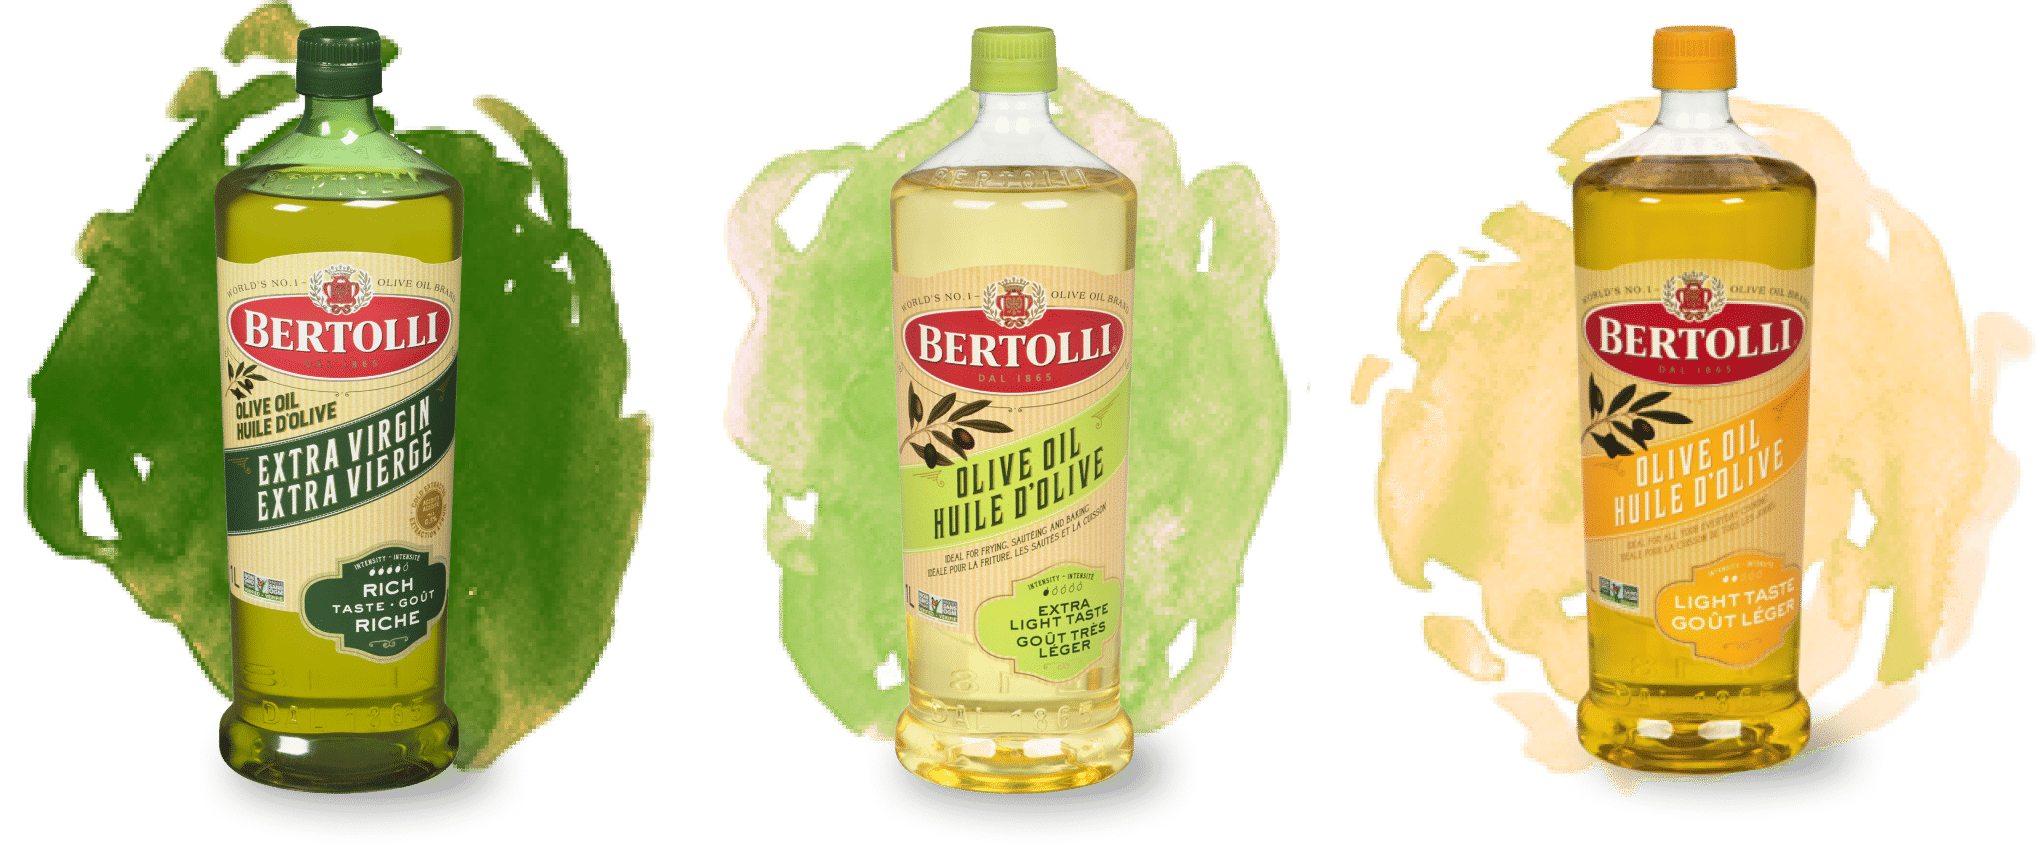 Bertolli olive oil bottles